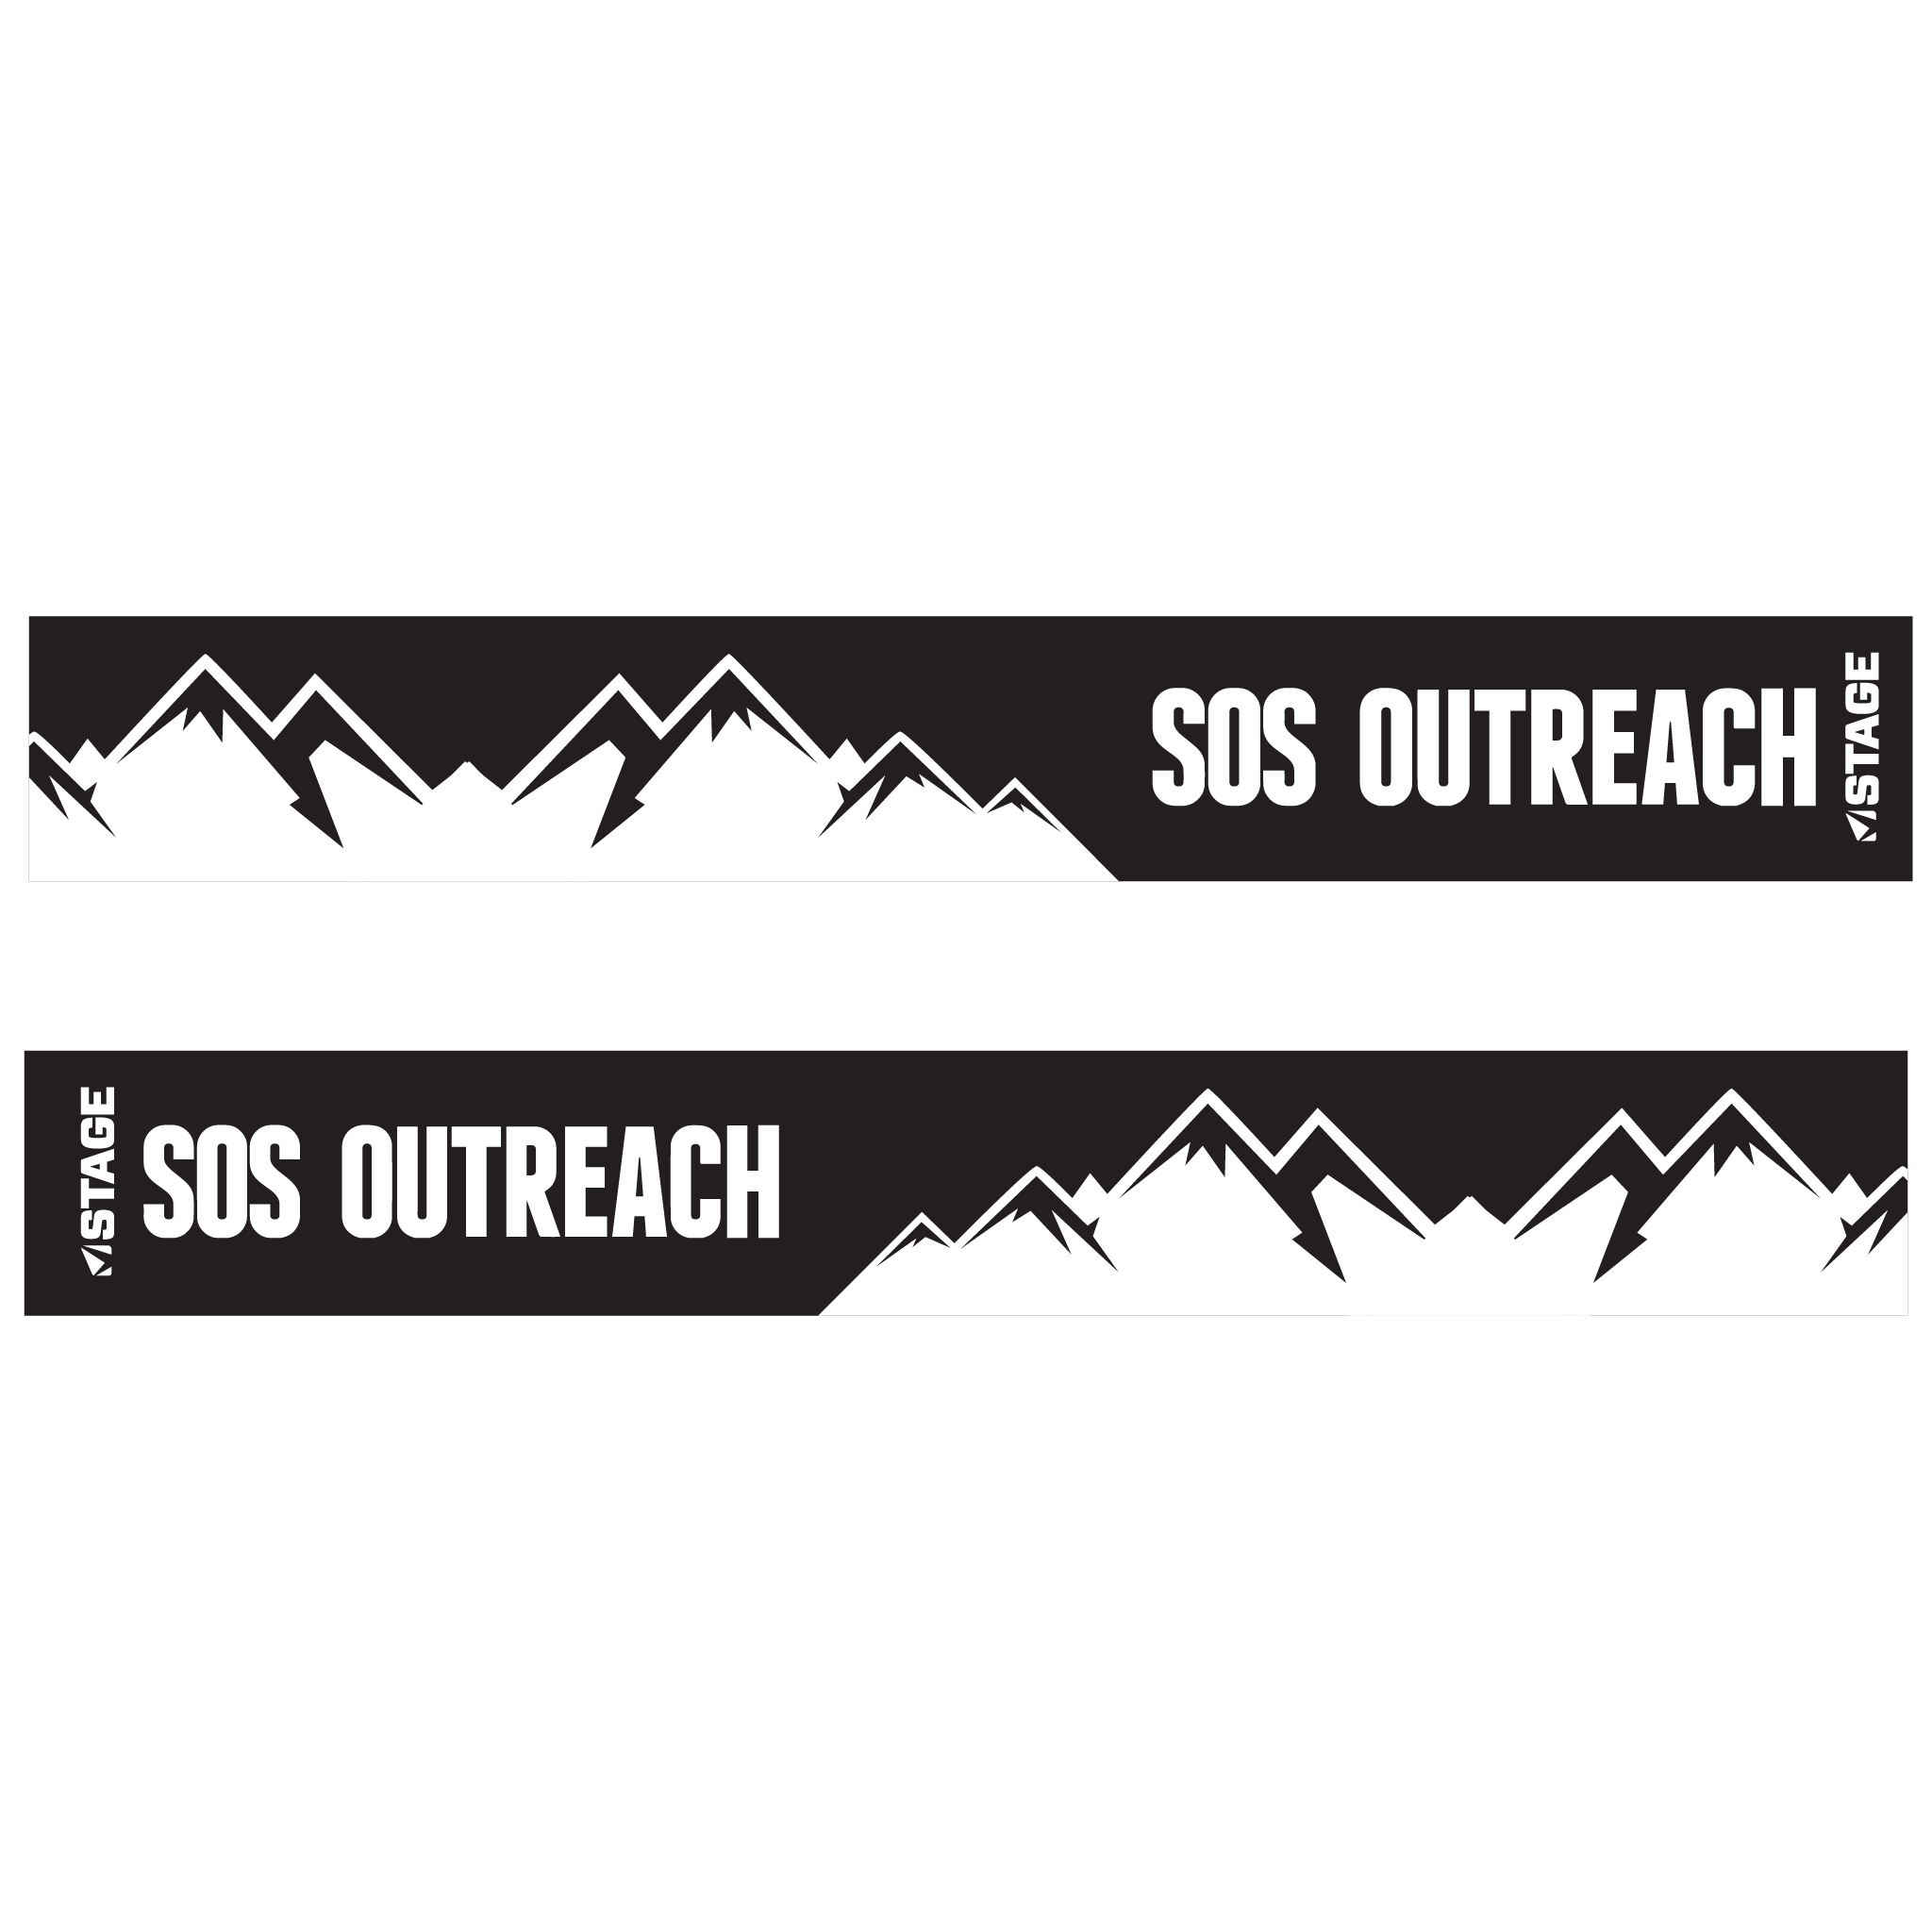 SOS Outreach Frameless Prop Ski Goggle - Mirror Chrome Smoke Lens